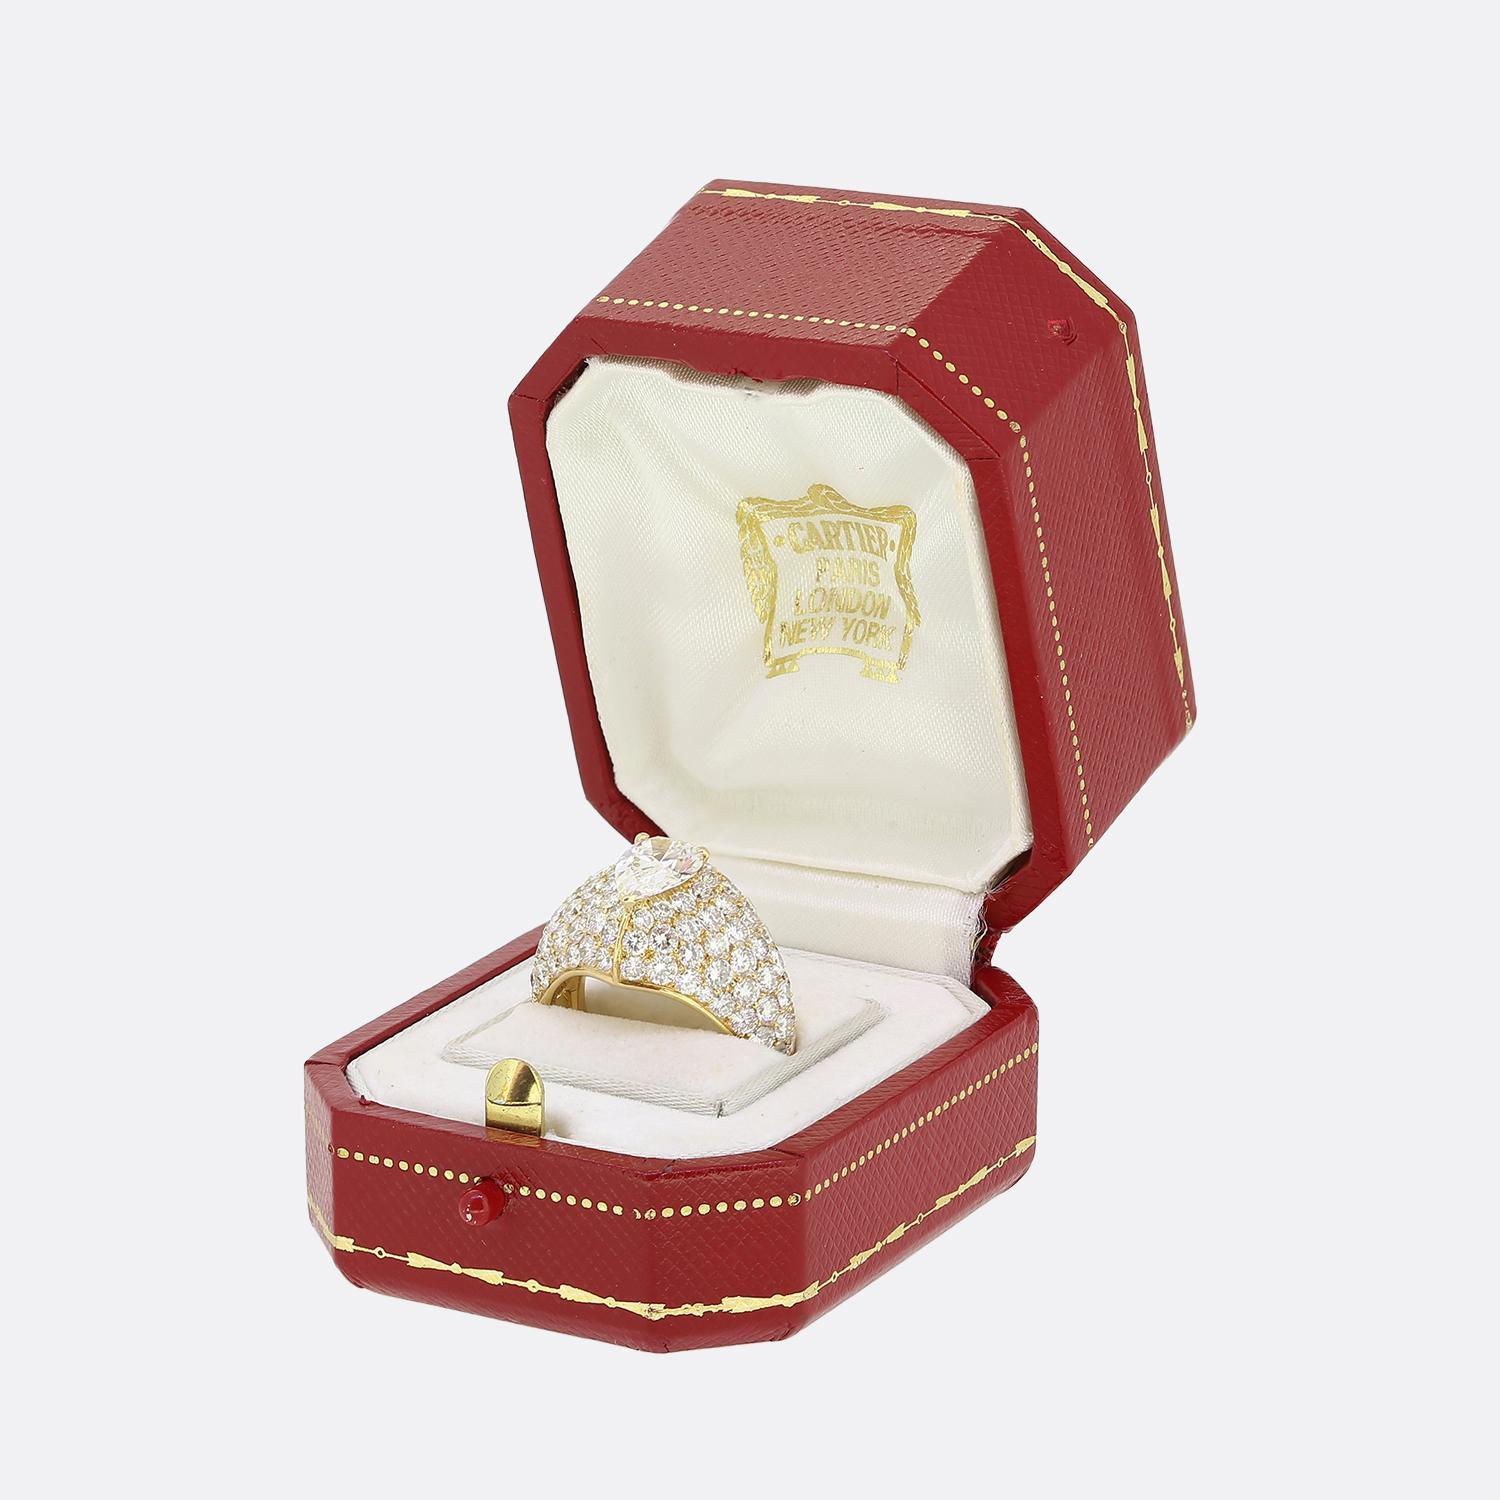 Cartier 1.44 Carat Diamond Dress Ring For Sale 1